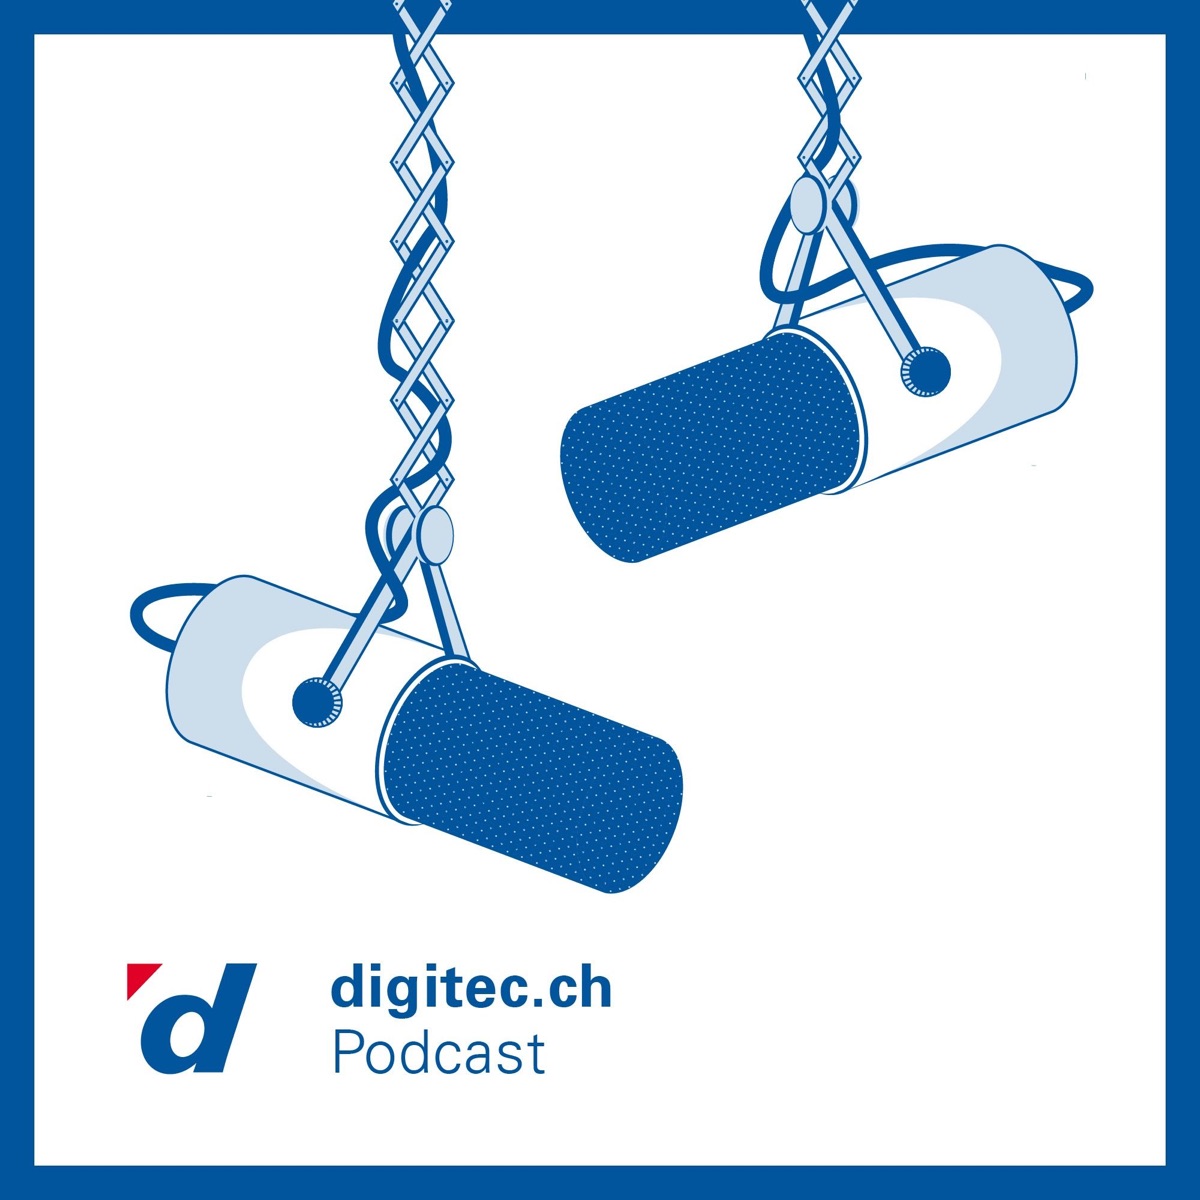 Digitec Podcast Podcast Podtail